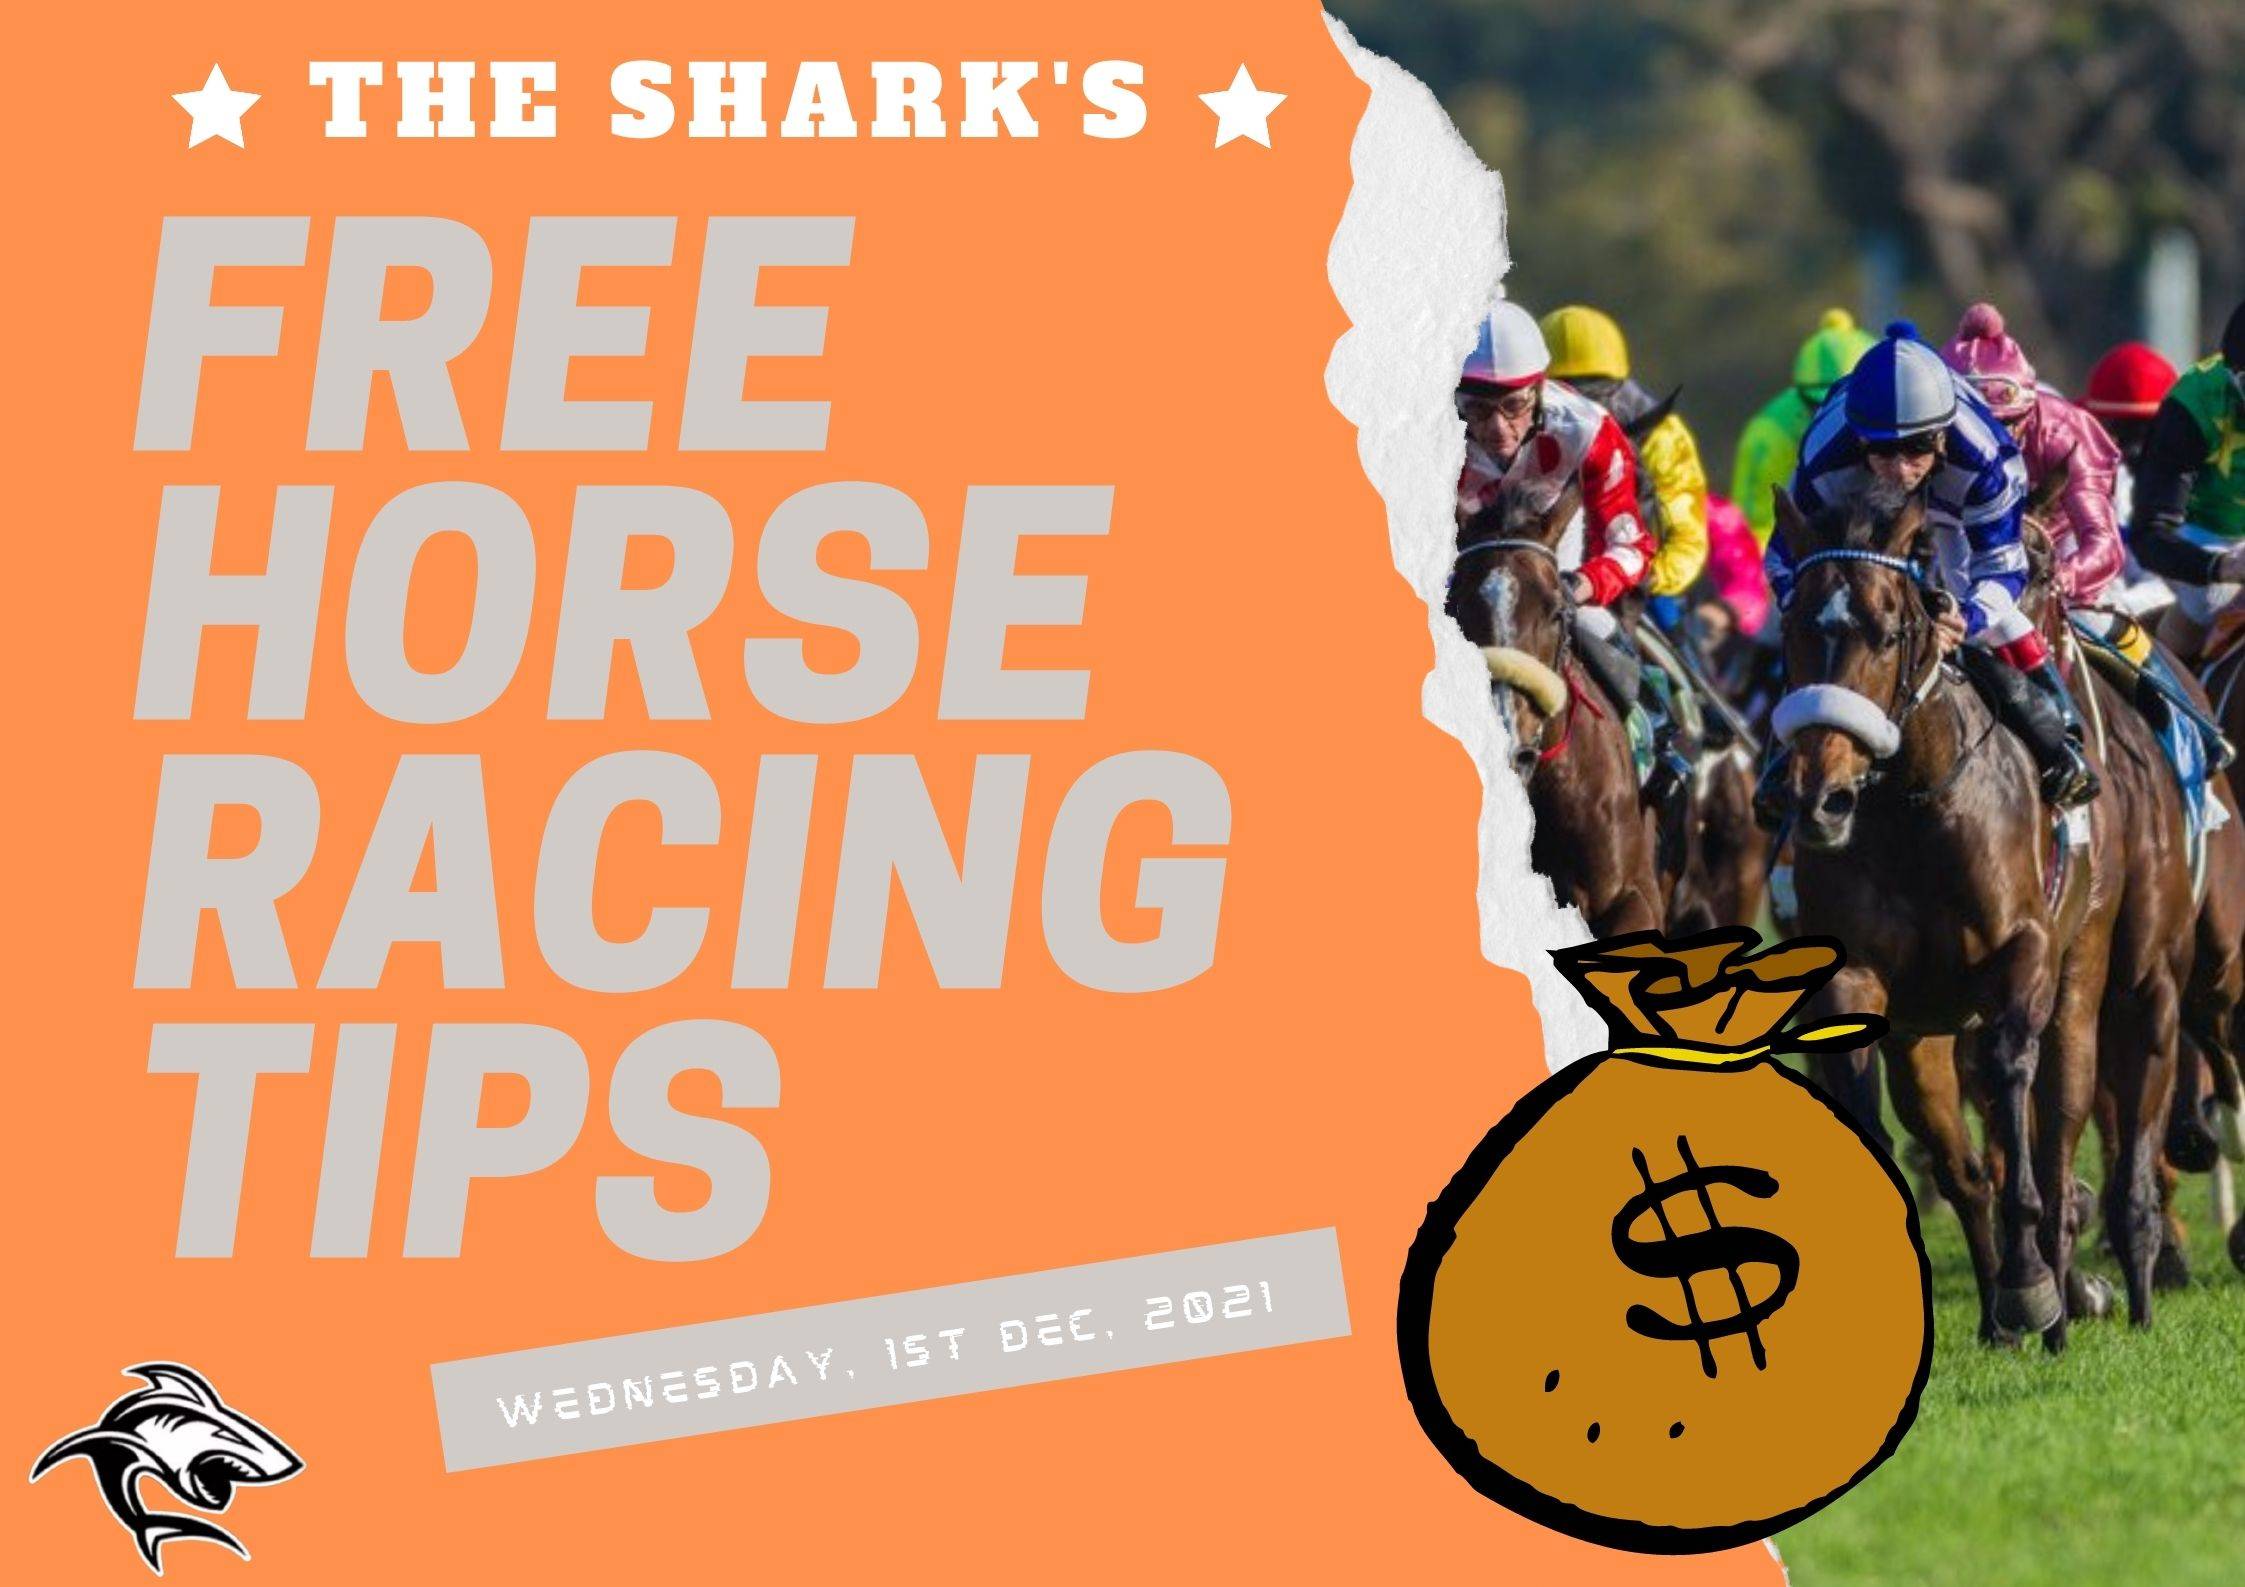 Free Horse Racing Tips - 1st Dec